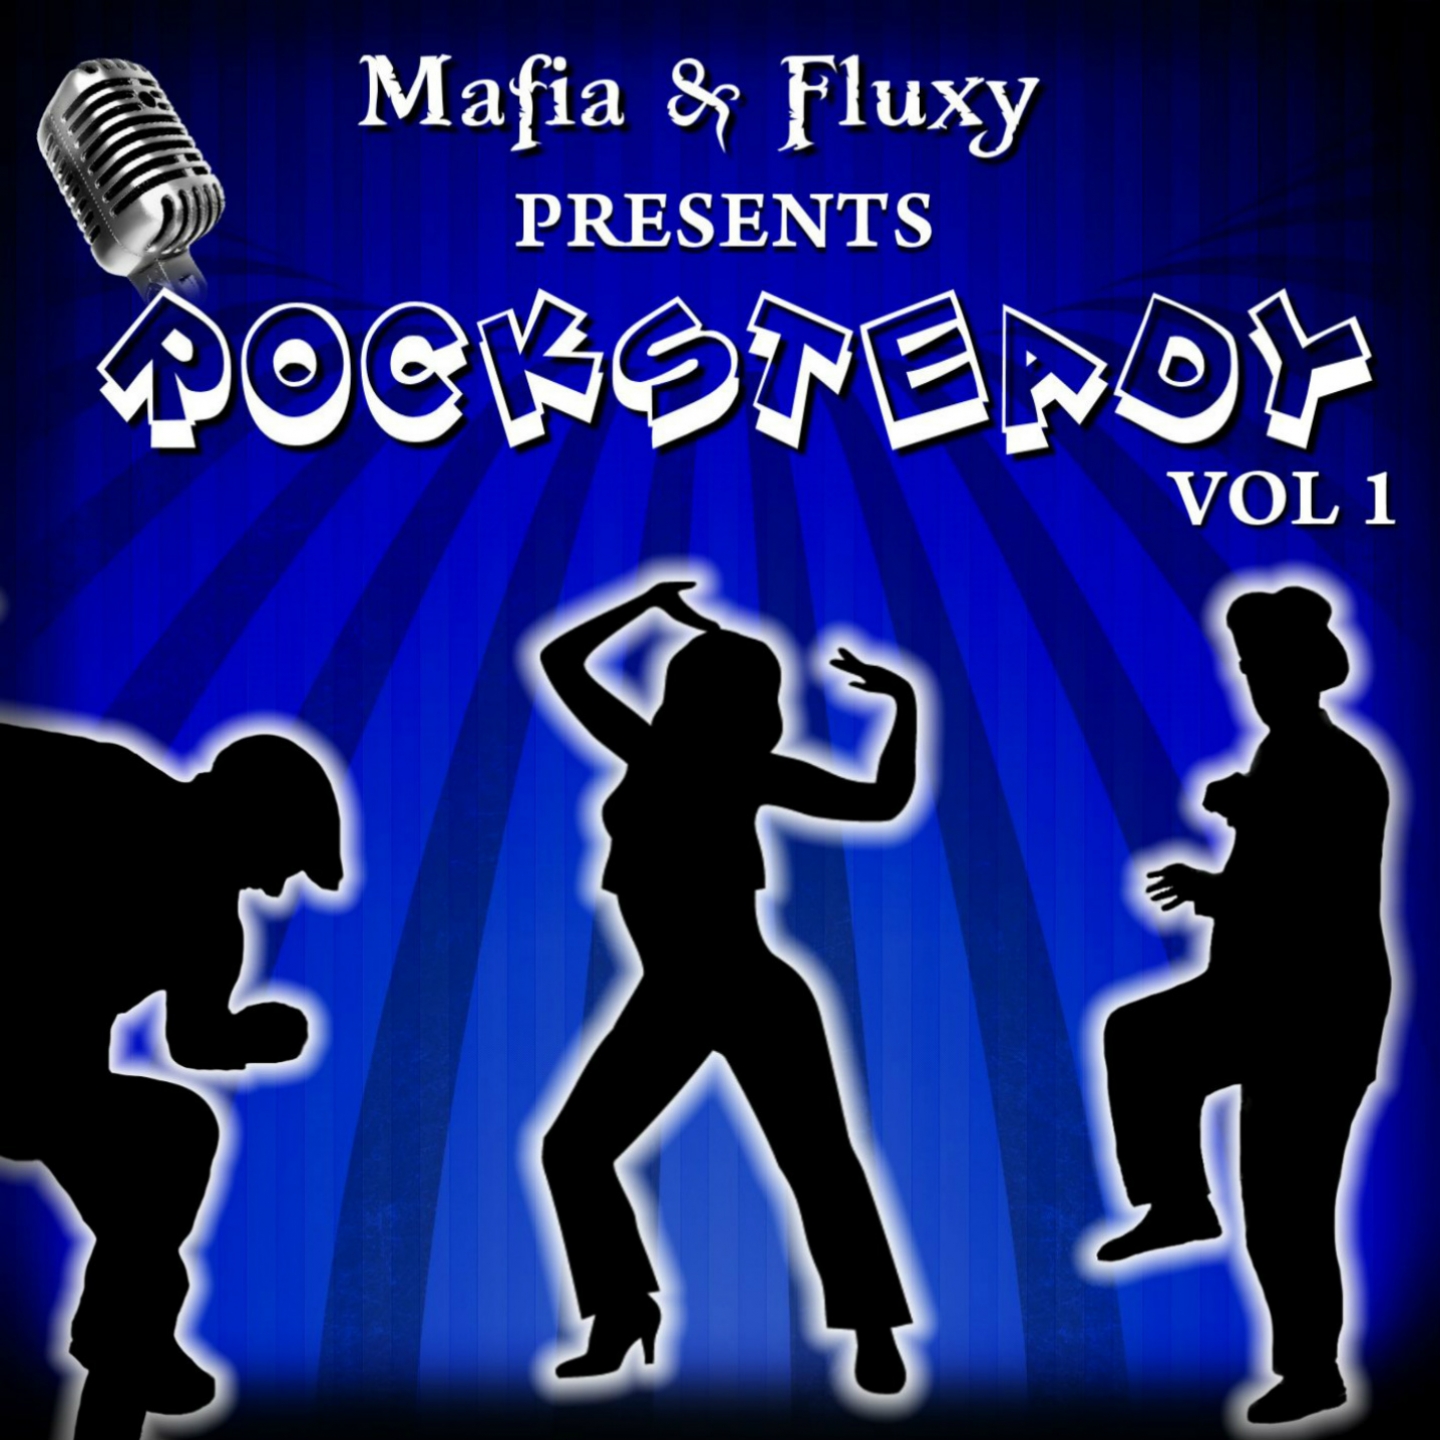 Mafia & Fluxy Presents: Rocksteady, Vol. 1